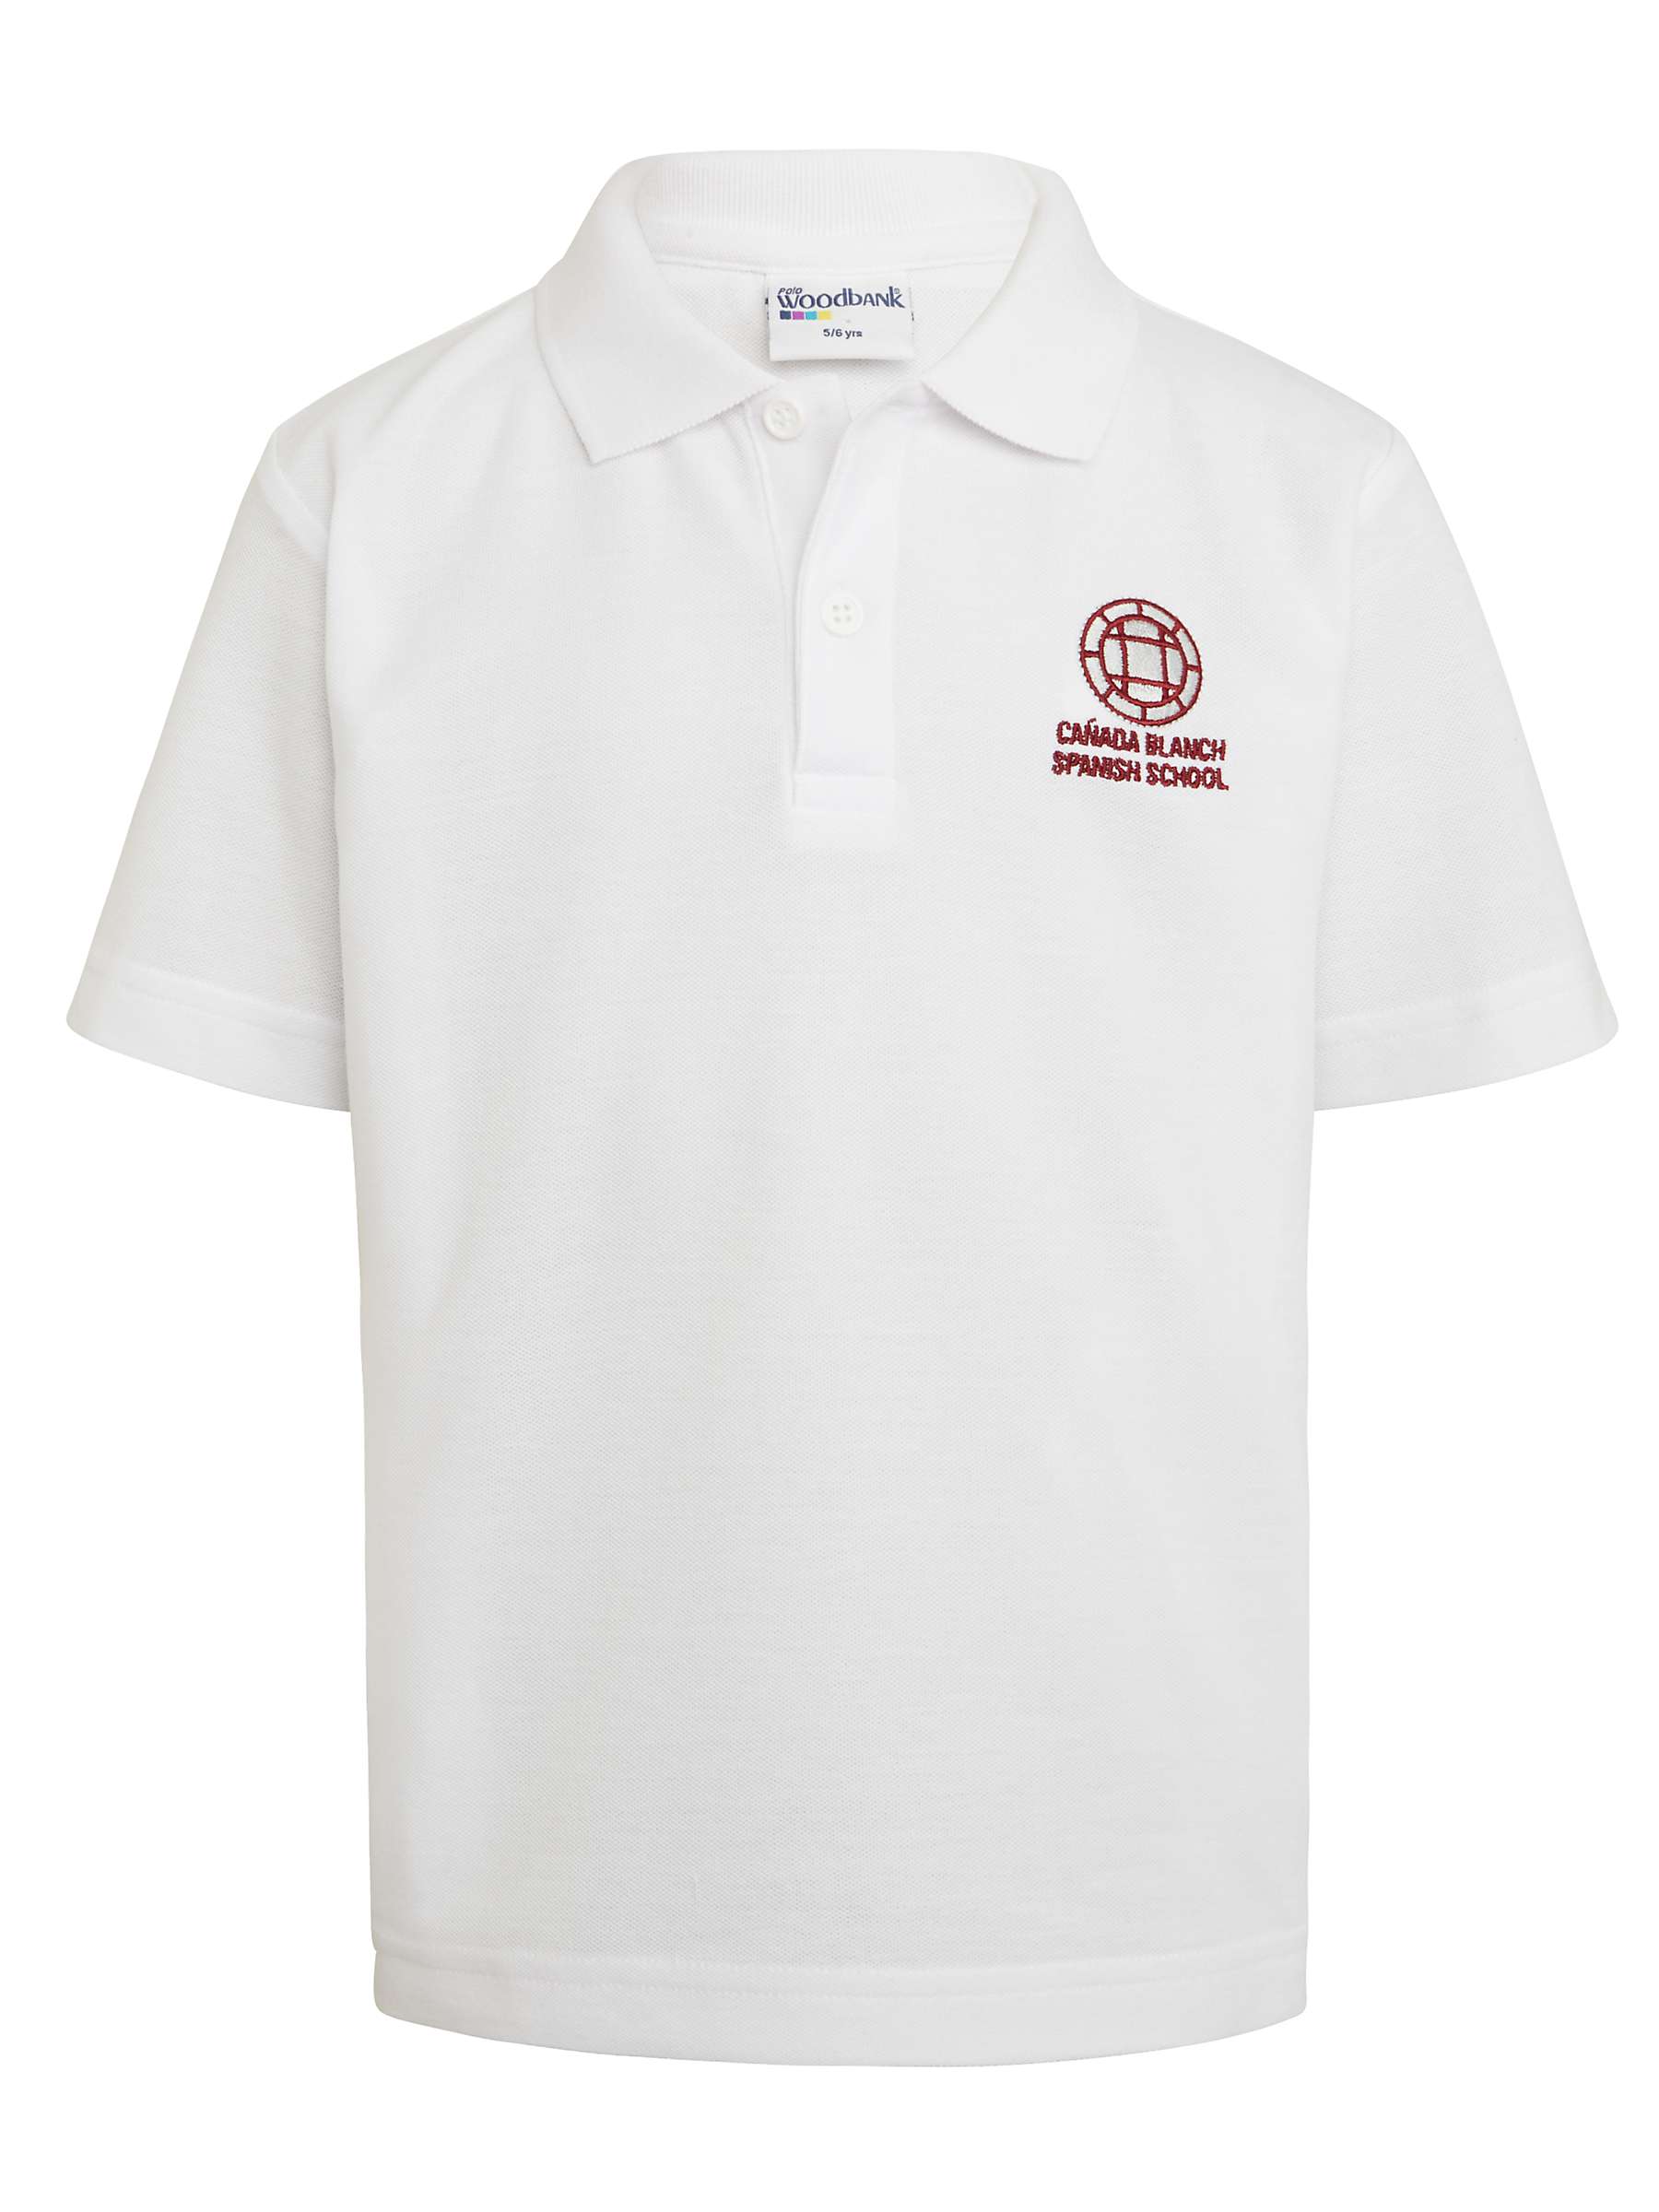 Buy Instituto Español Vicente Cañada Blanch School Polo Shirt, White Online at johnlewis.com